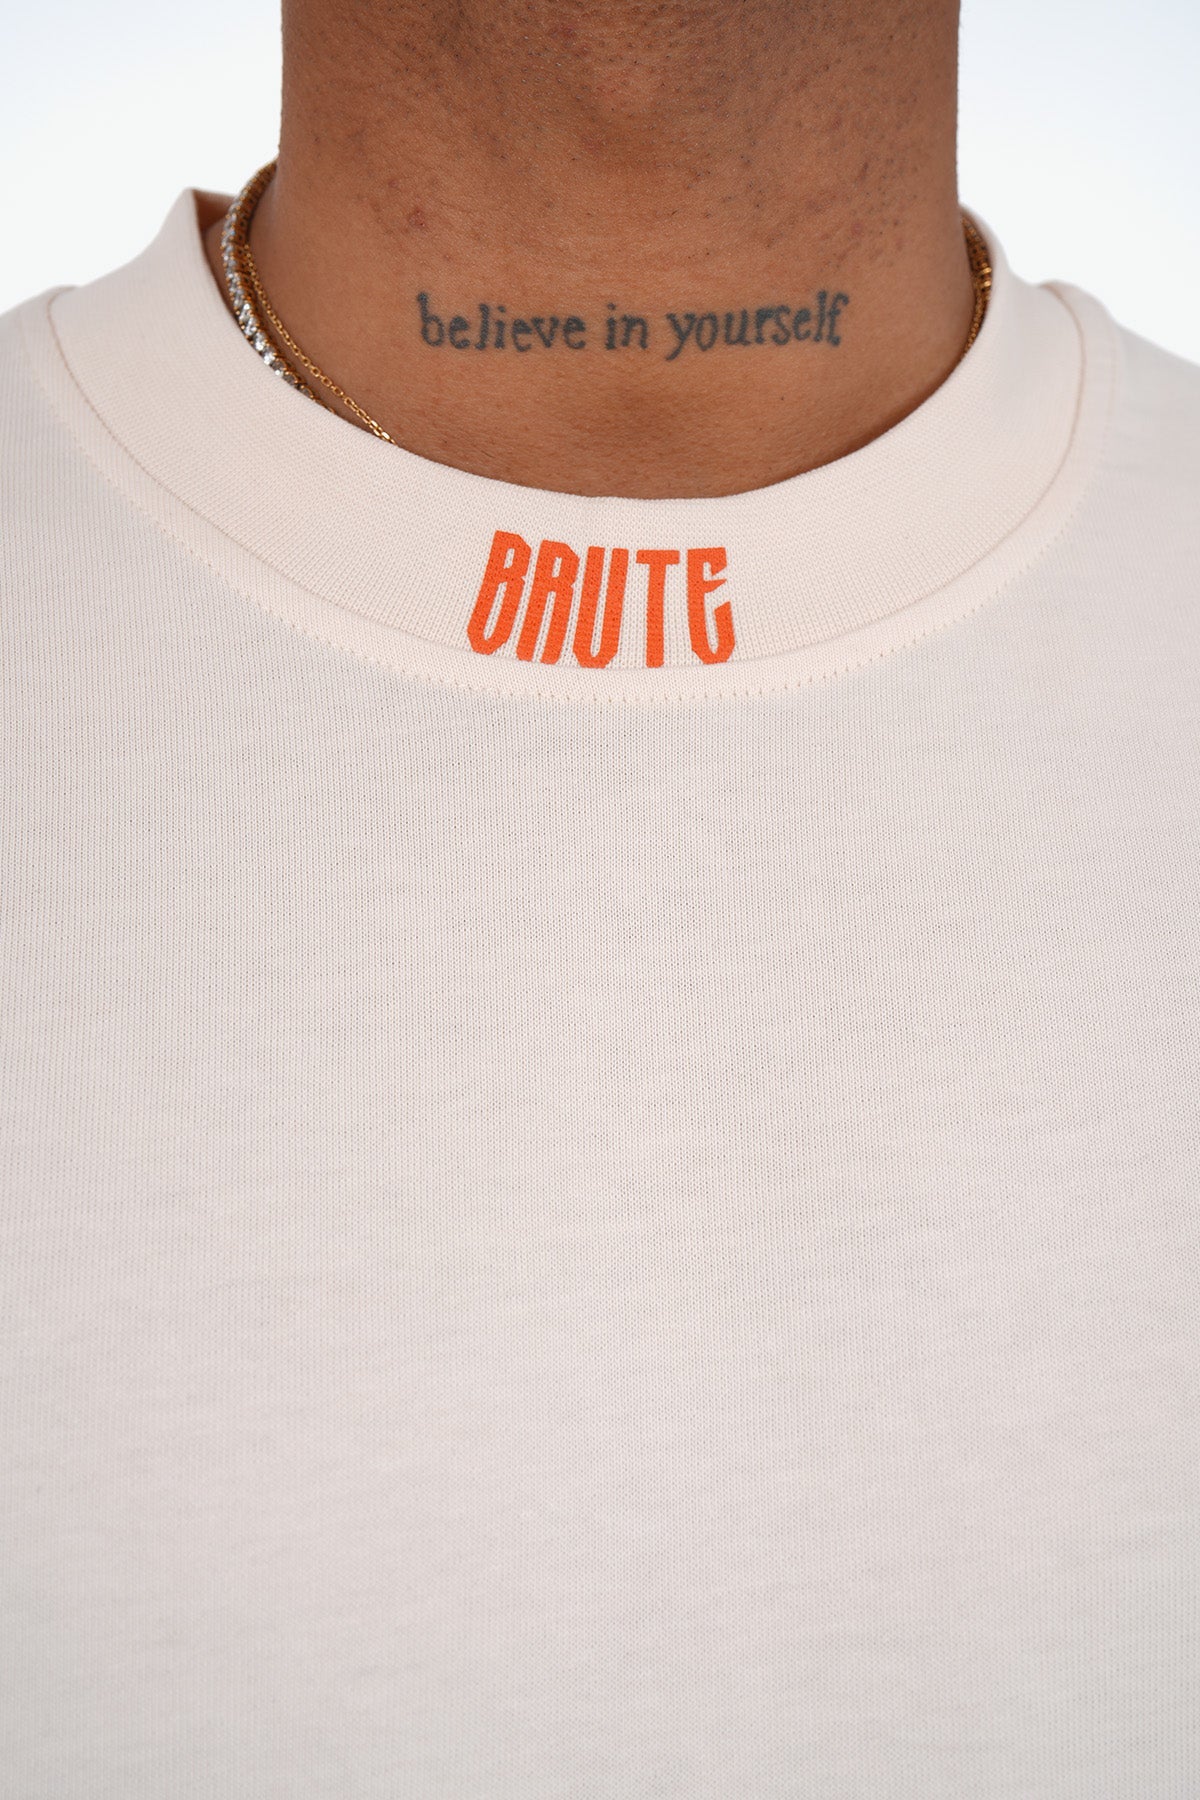 T-Shirt "Brute" Beige